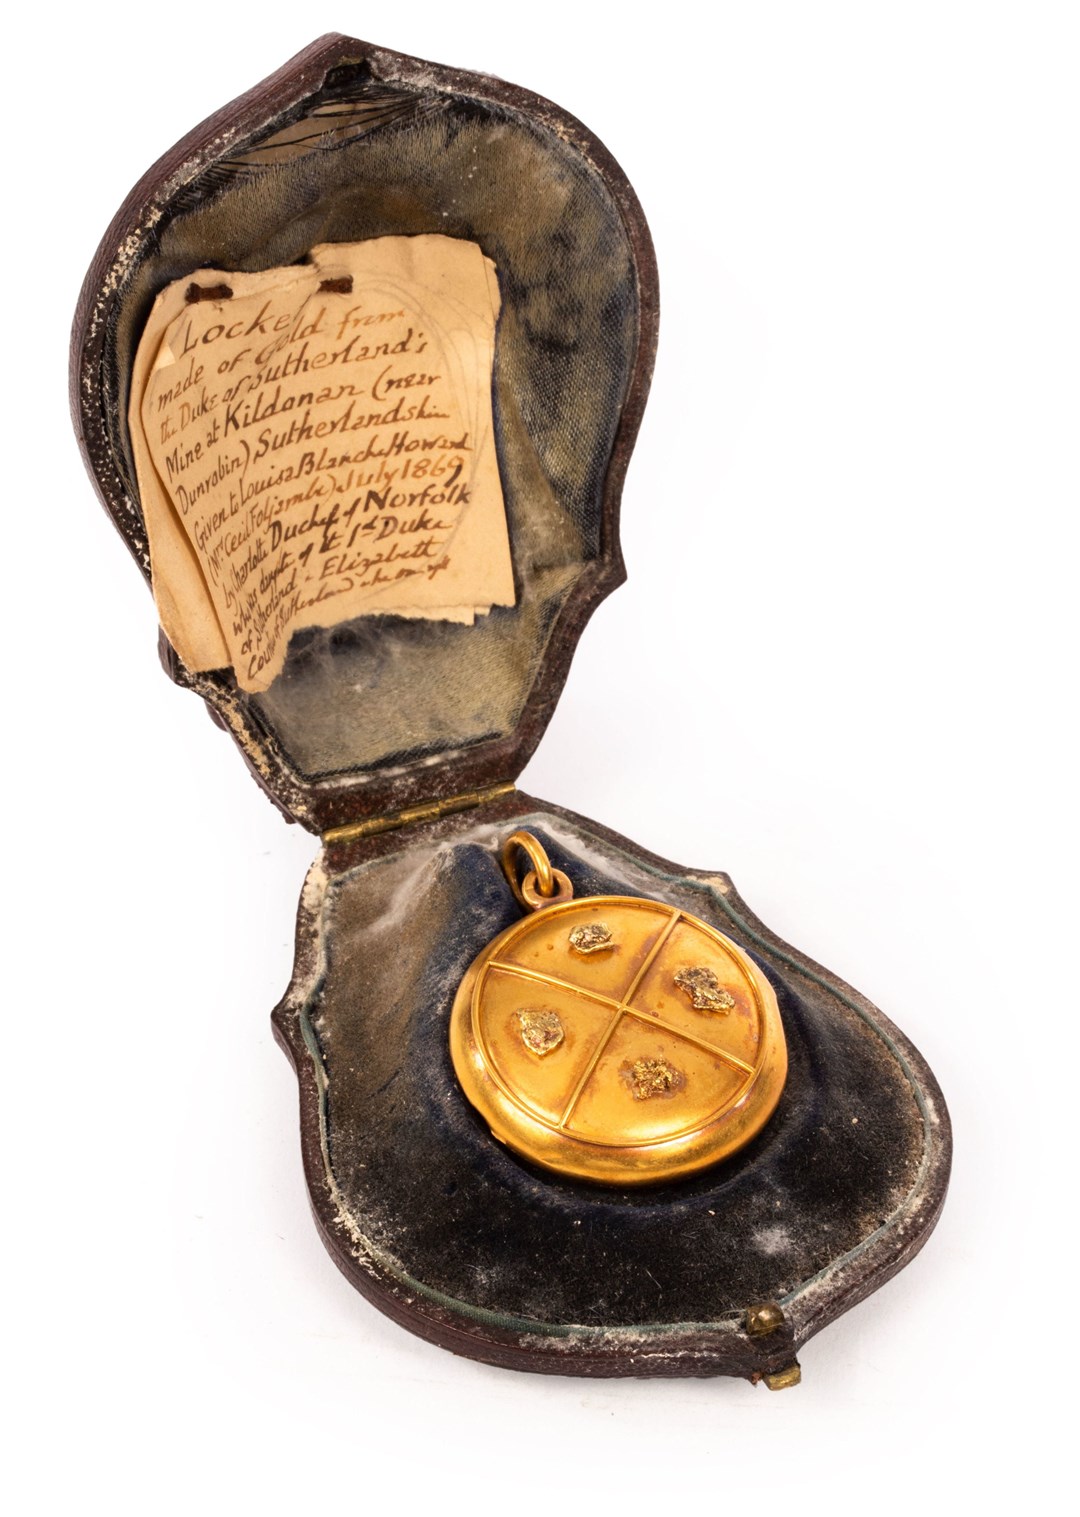 The Kildonan gold locket.